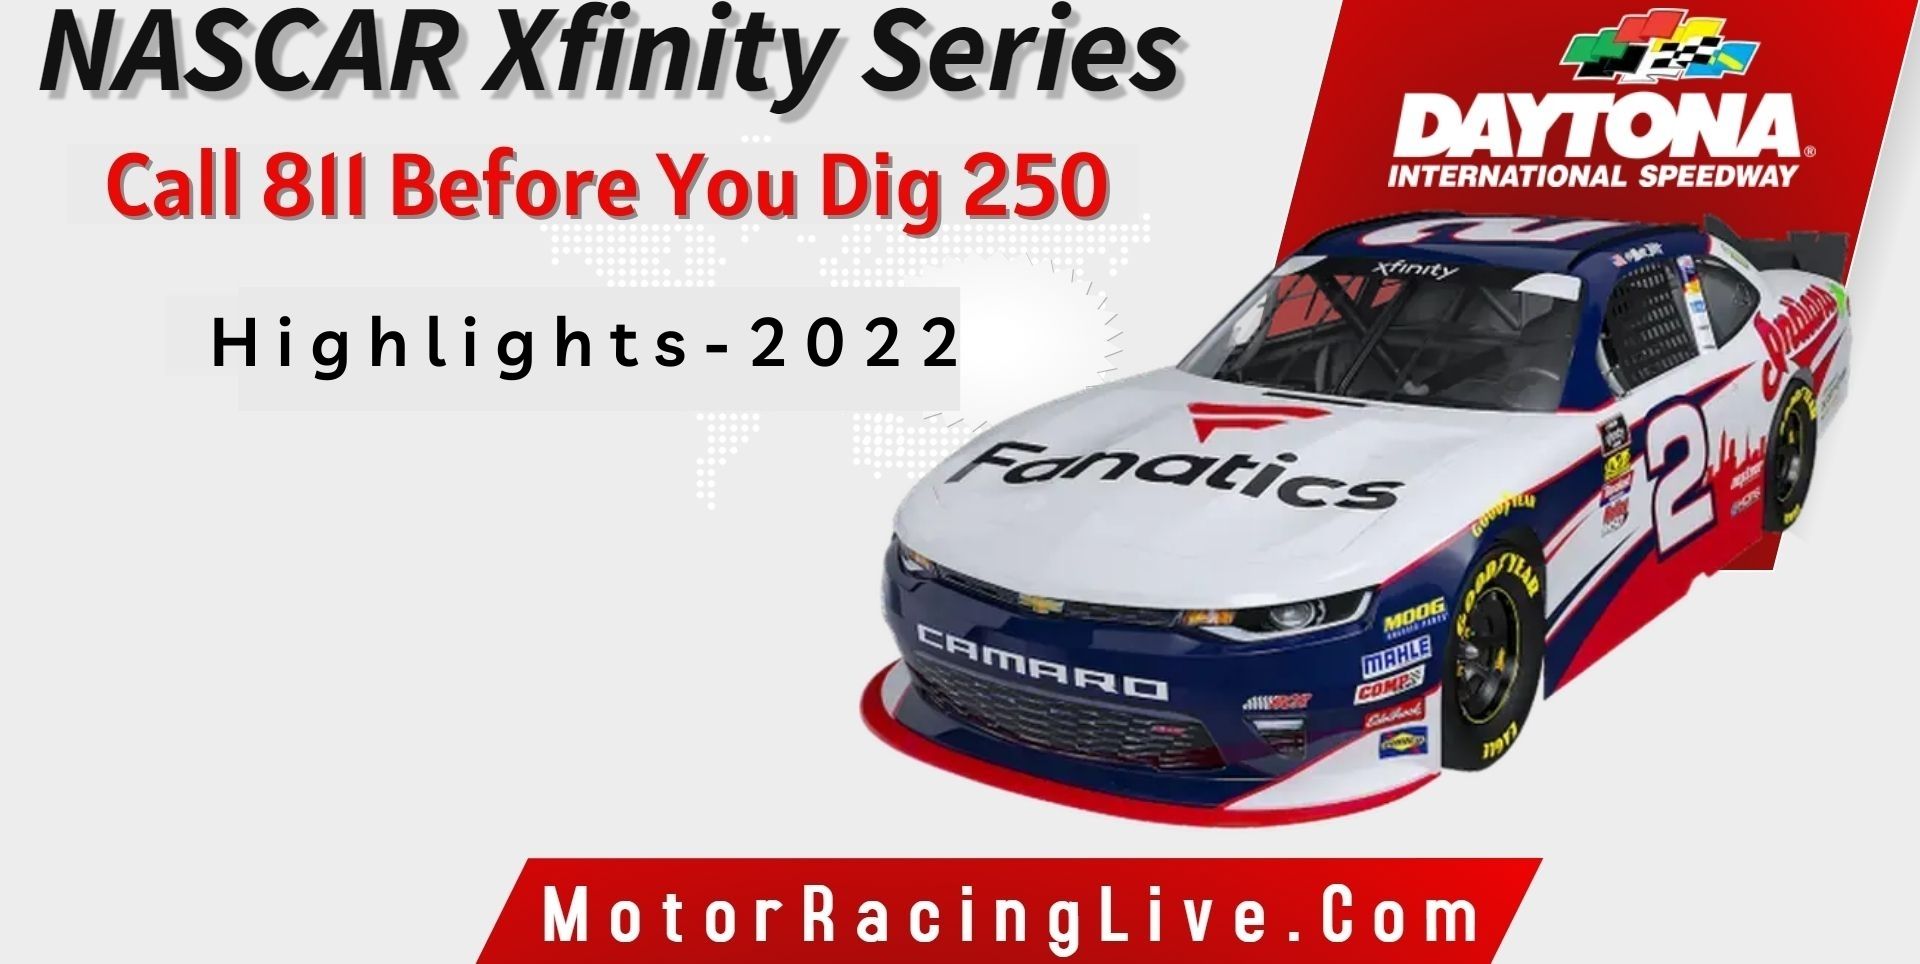 Call 811 Before You Dig 250 Highlights 2022 NASCAR Xfinity